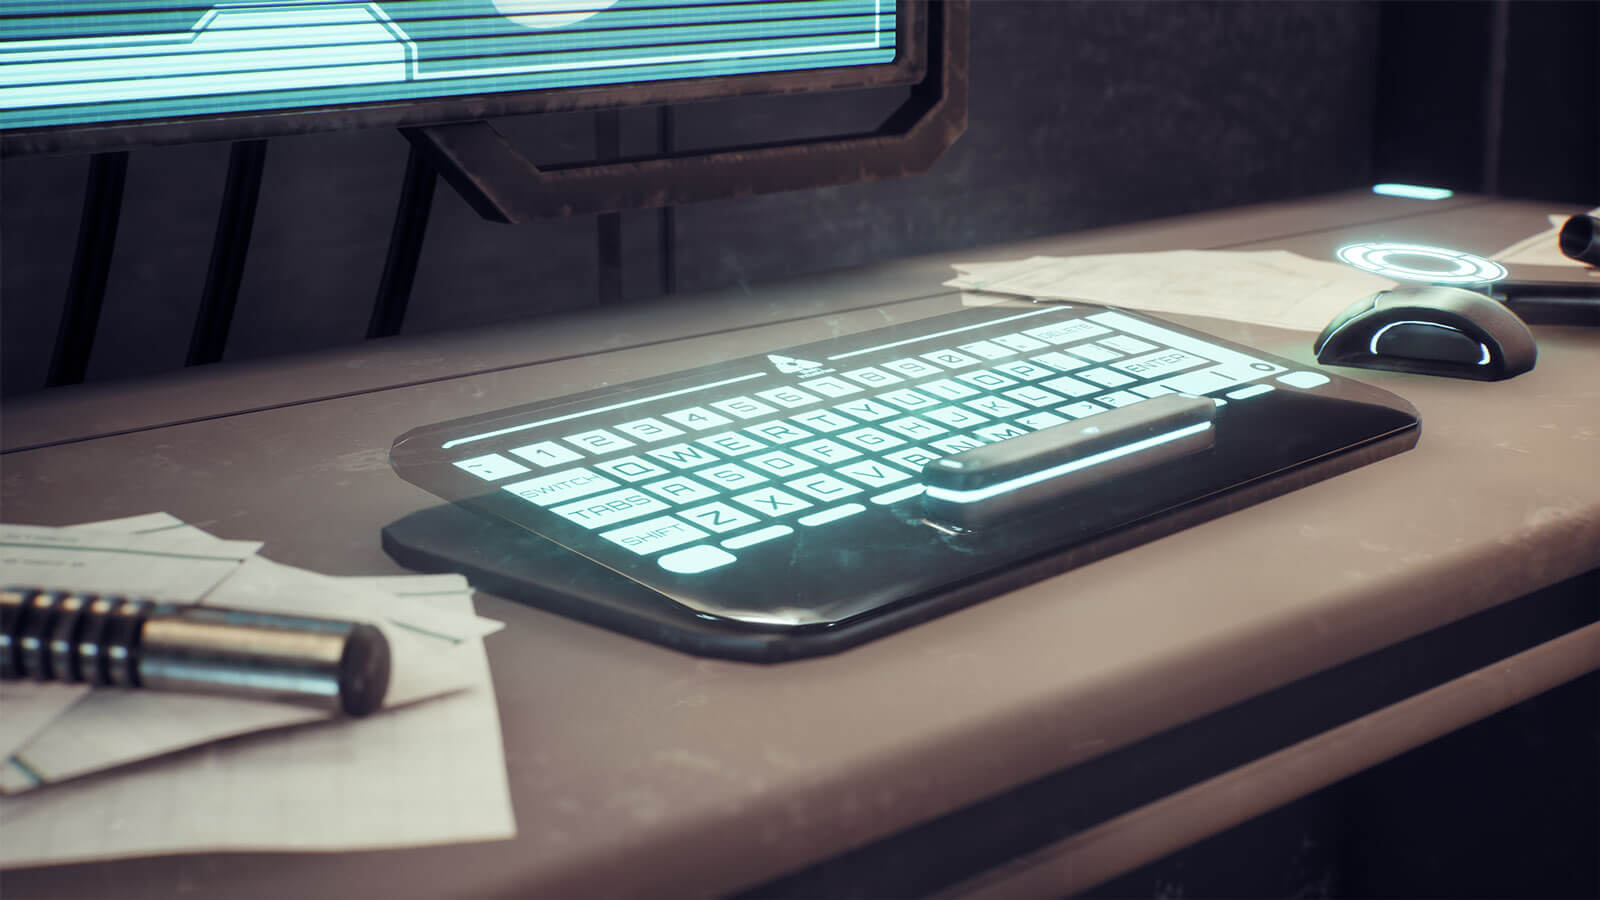 A futiristic clear keyboard with glowing blue keys sits atop a desk